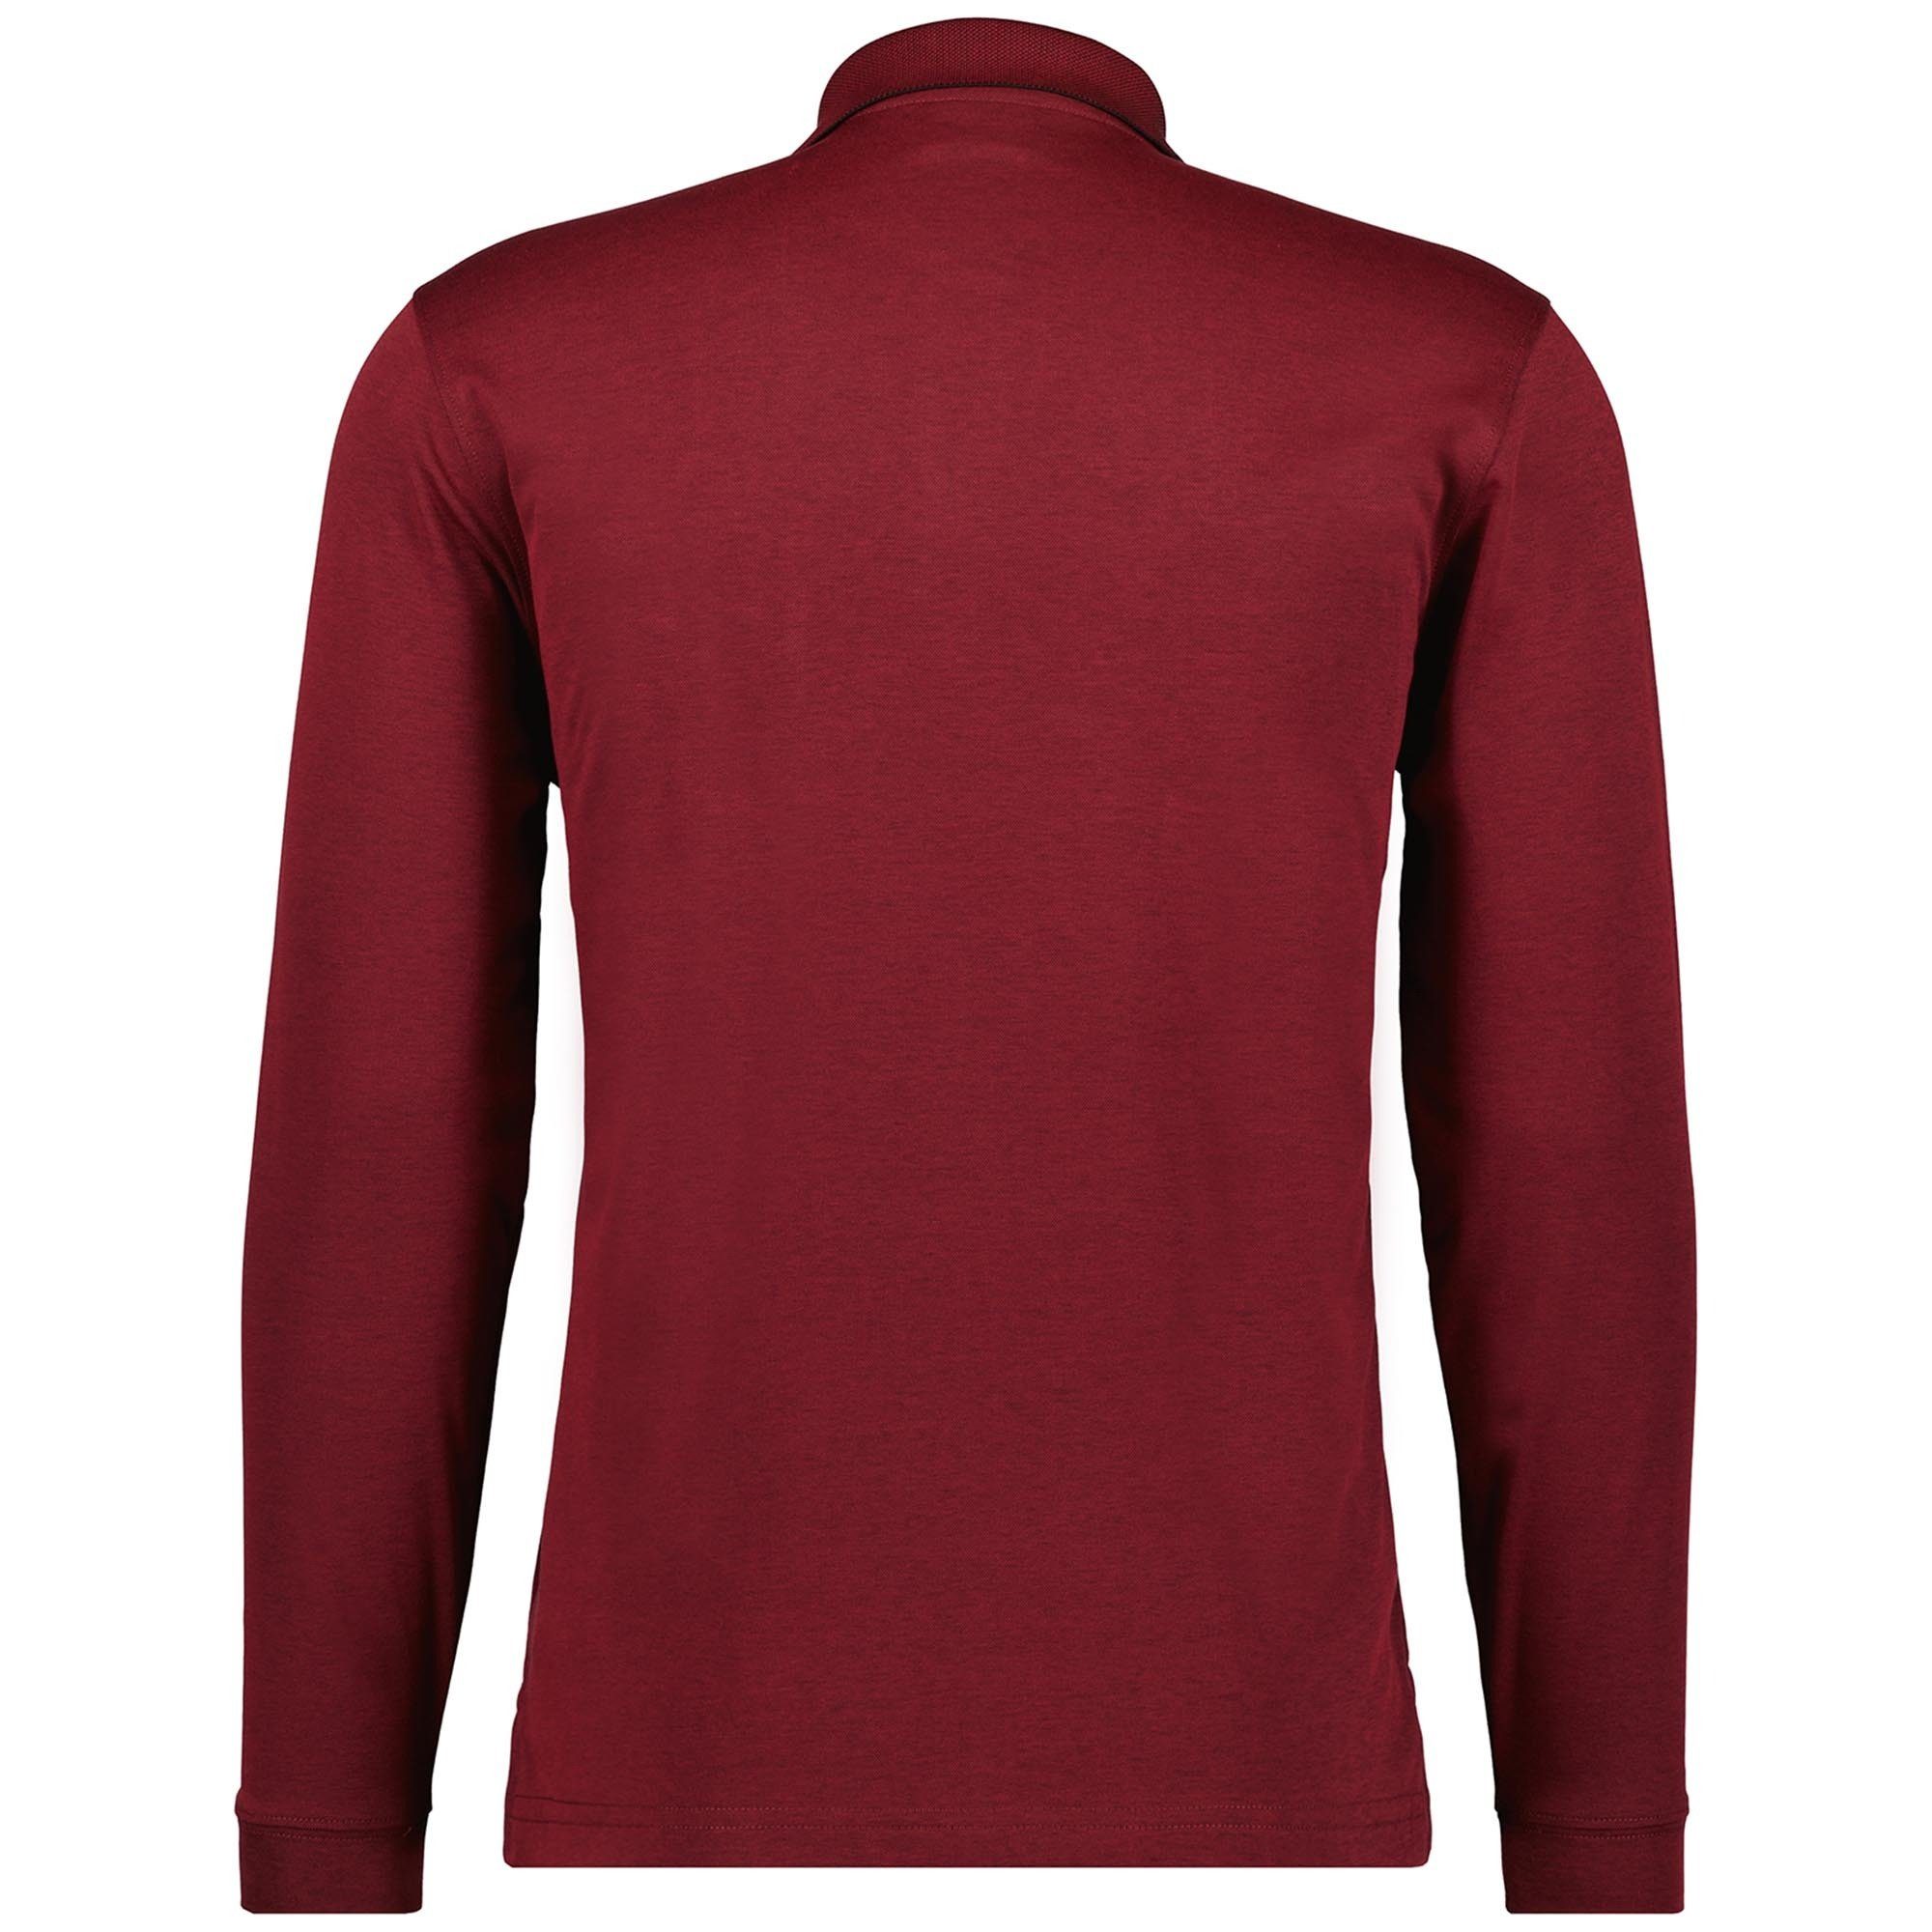 RAGMAN Poloshirt Herren Langarm-Poloshirt Knit Knopf Rot - Polo Soft